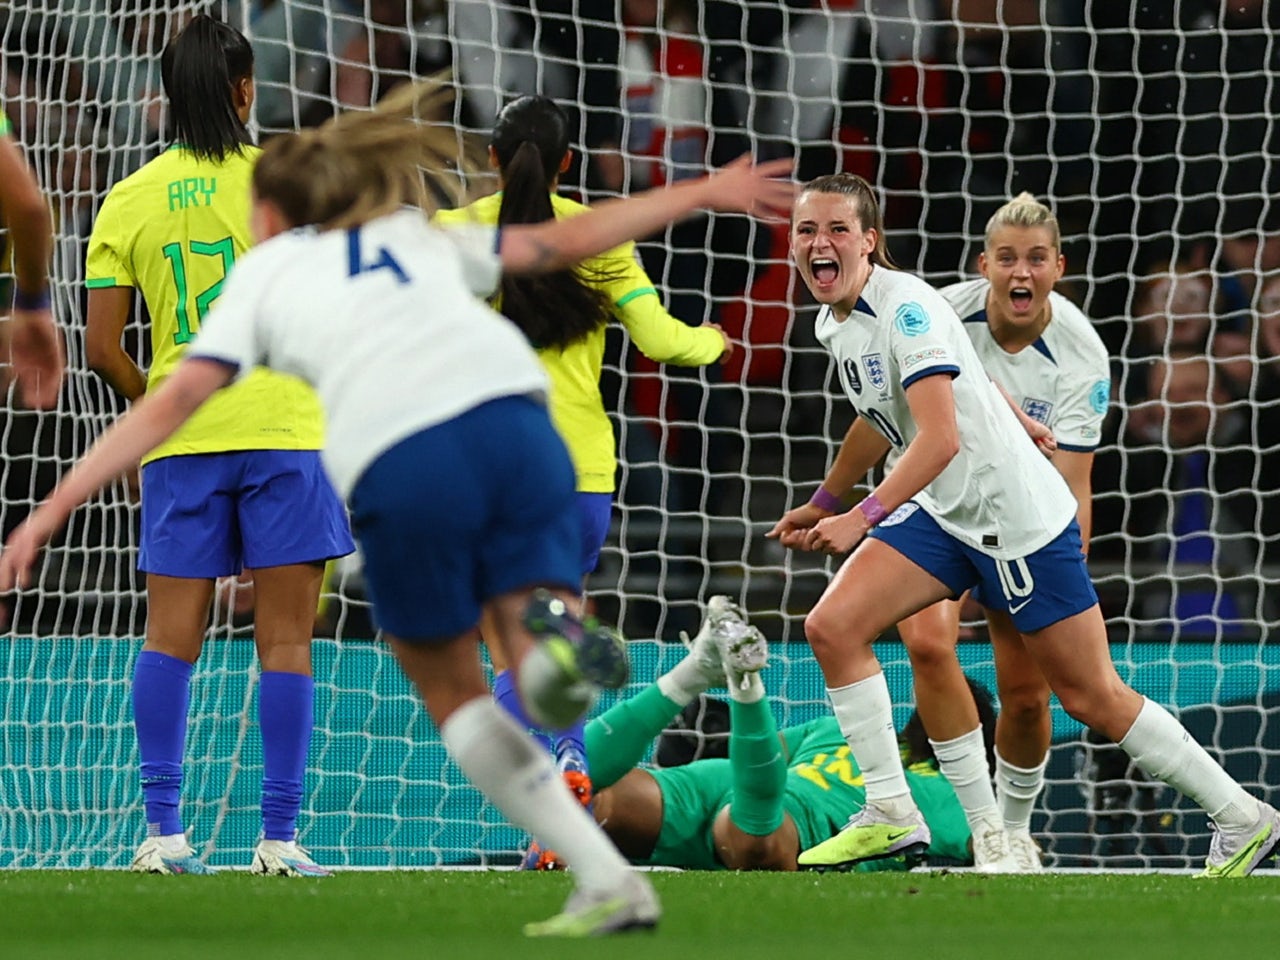 England beat Brazil on penalties to win inaugural Women's Finalissima at  Wembley